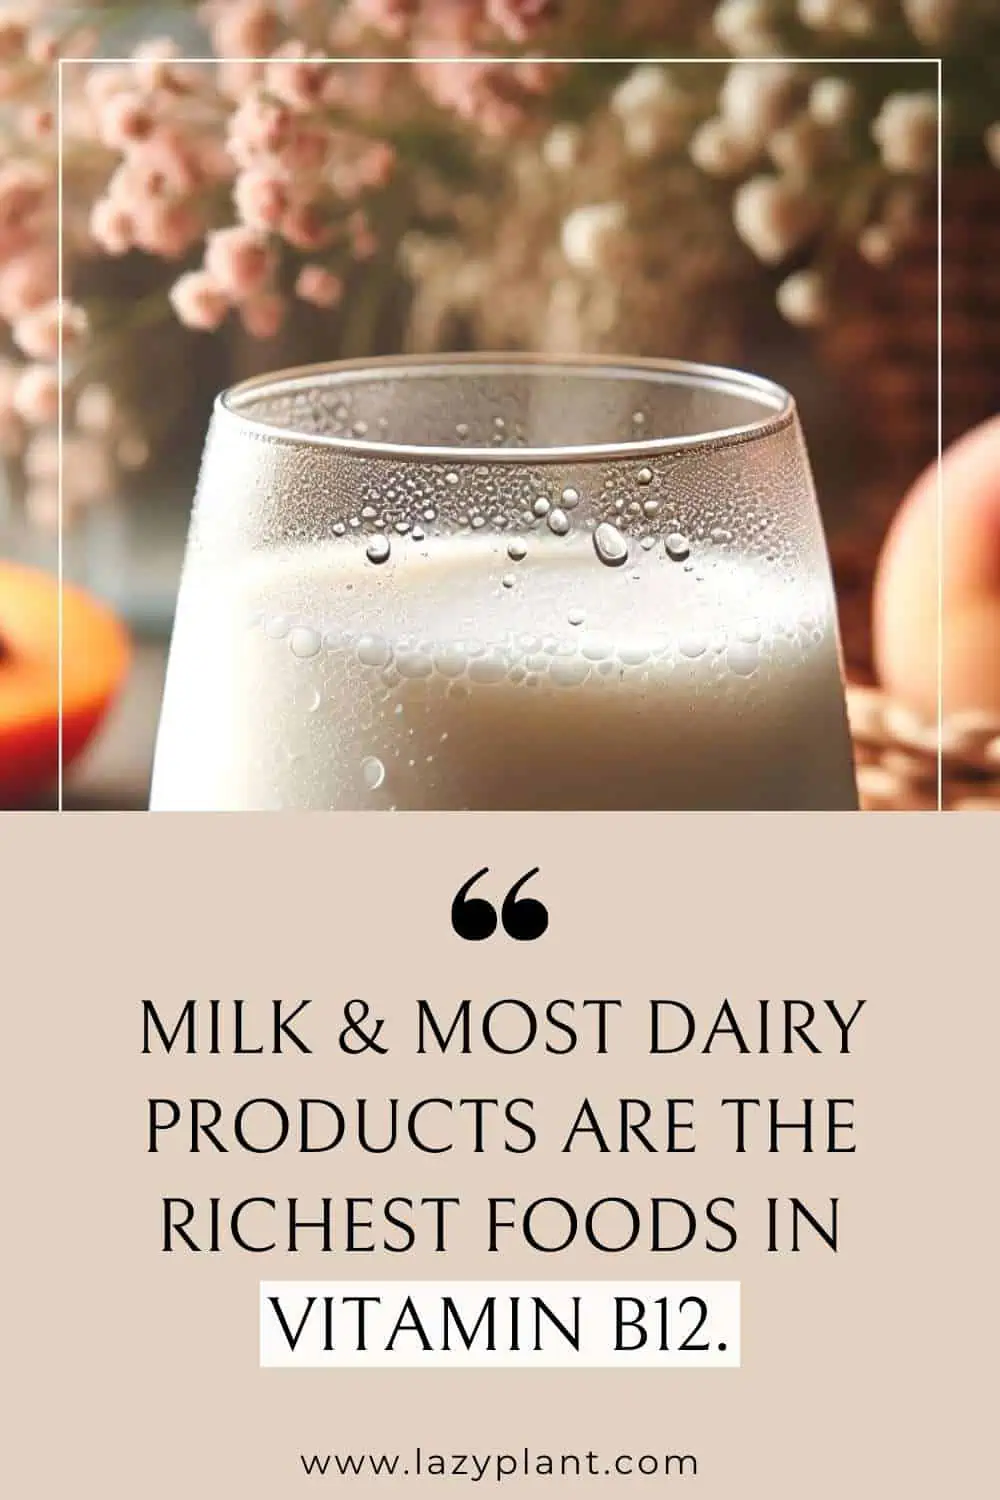 Milk: The richest natural source of Vitamin B12.